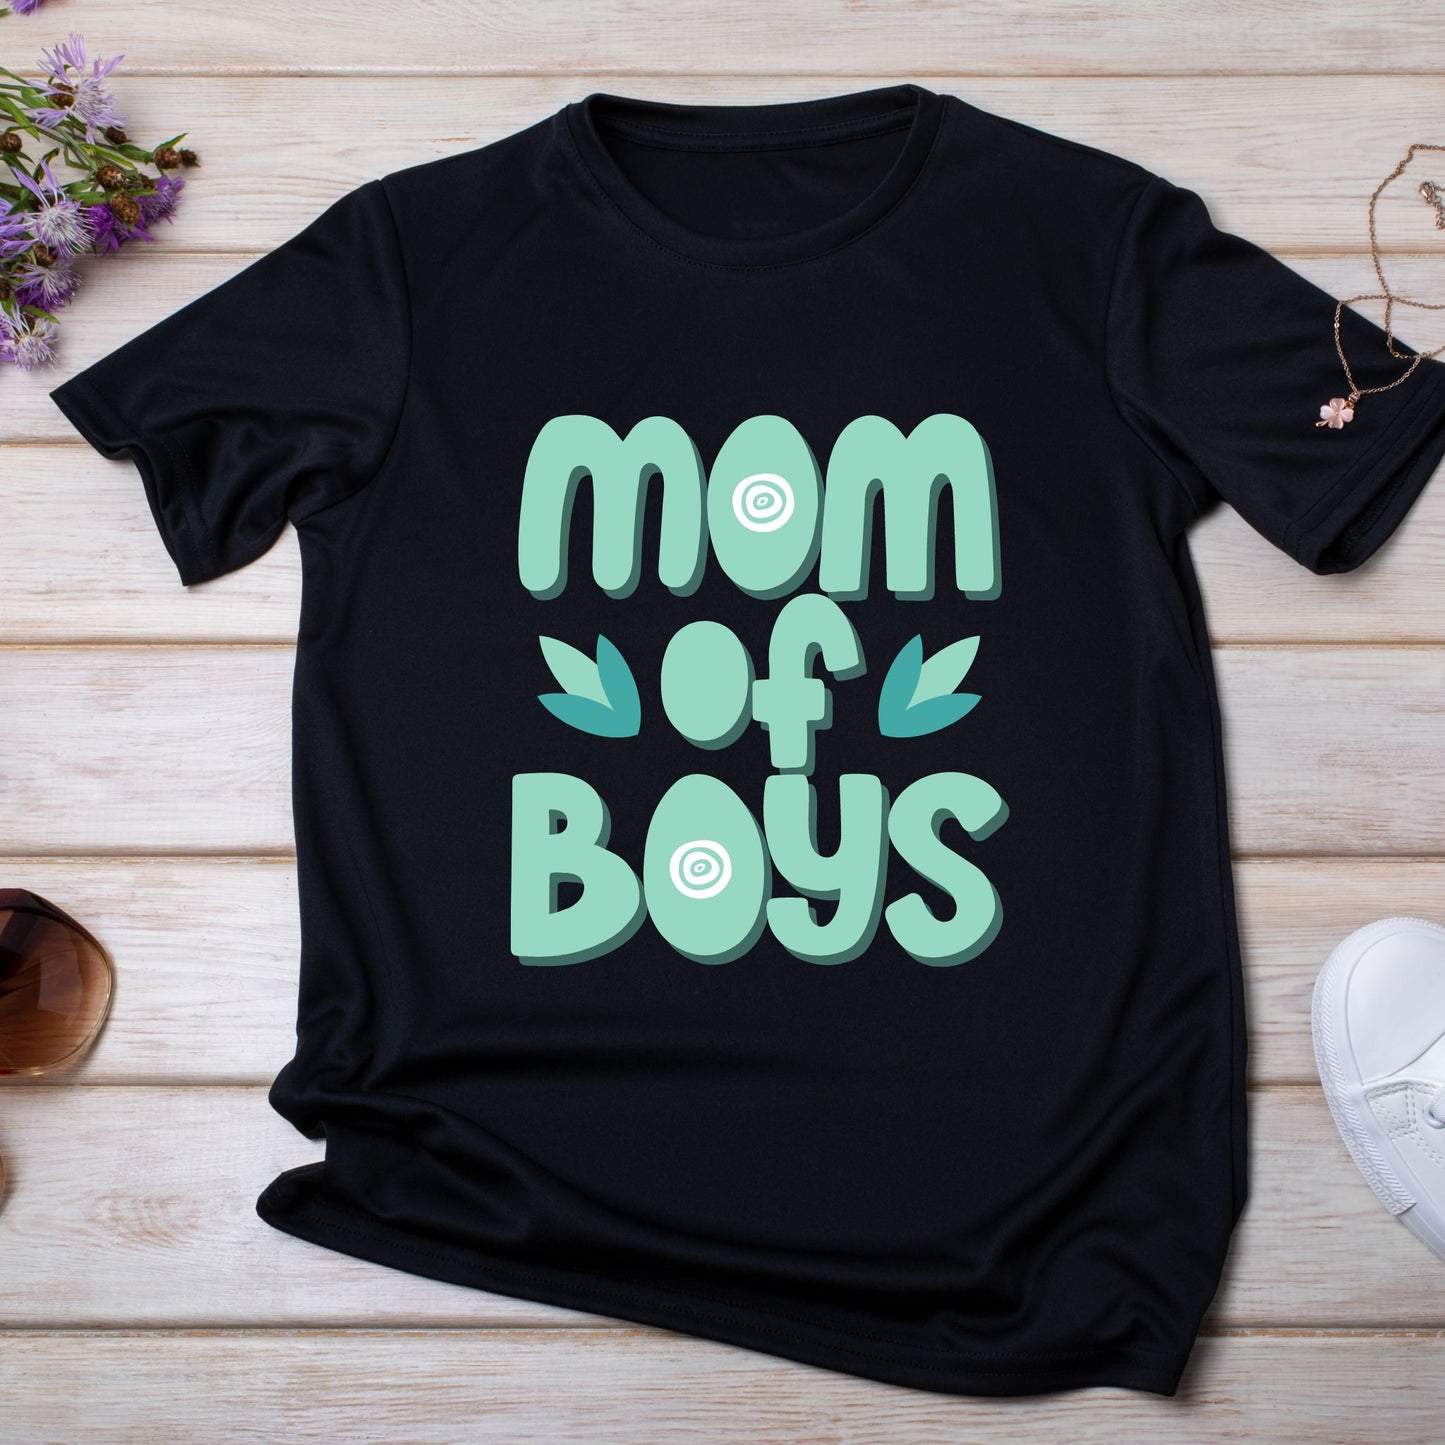 Mom of Boys - Mom Shirt